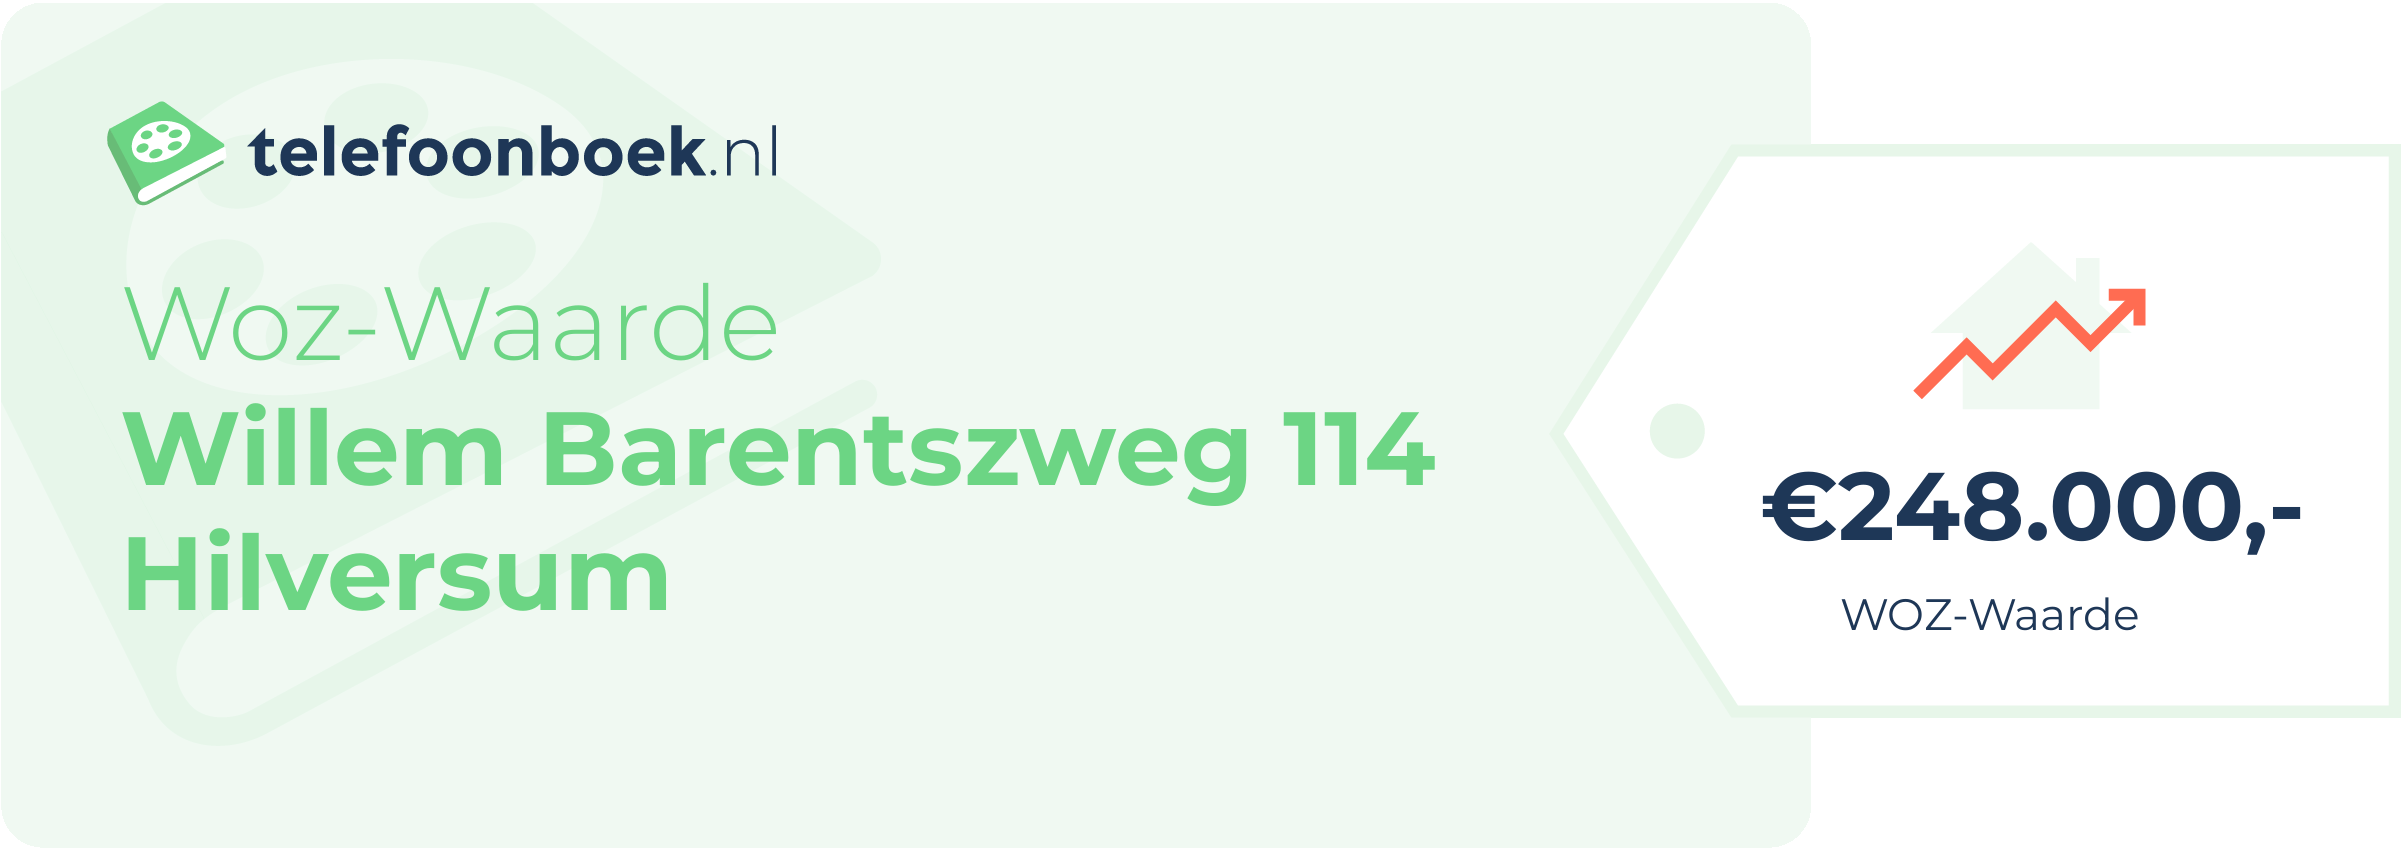 WOZ-waarde Willem Barentszweg 114 Hilversum